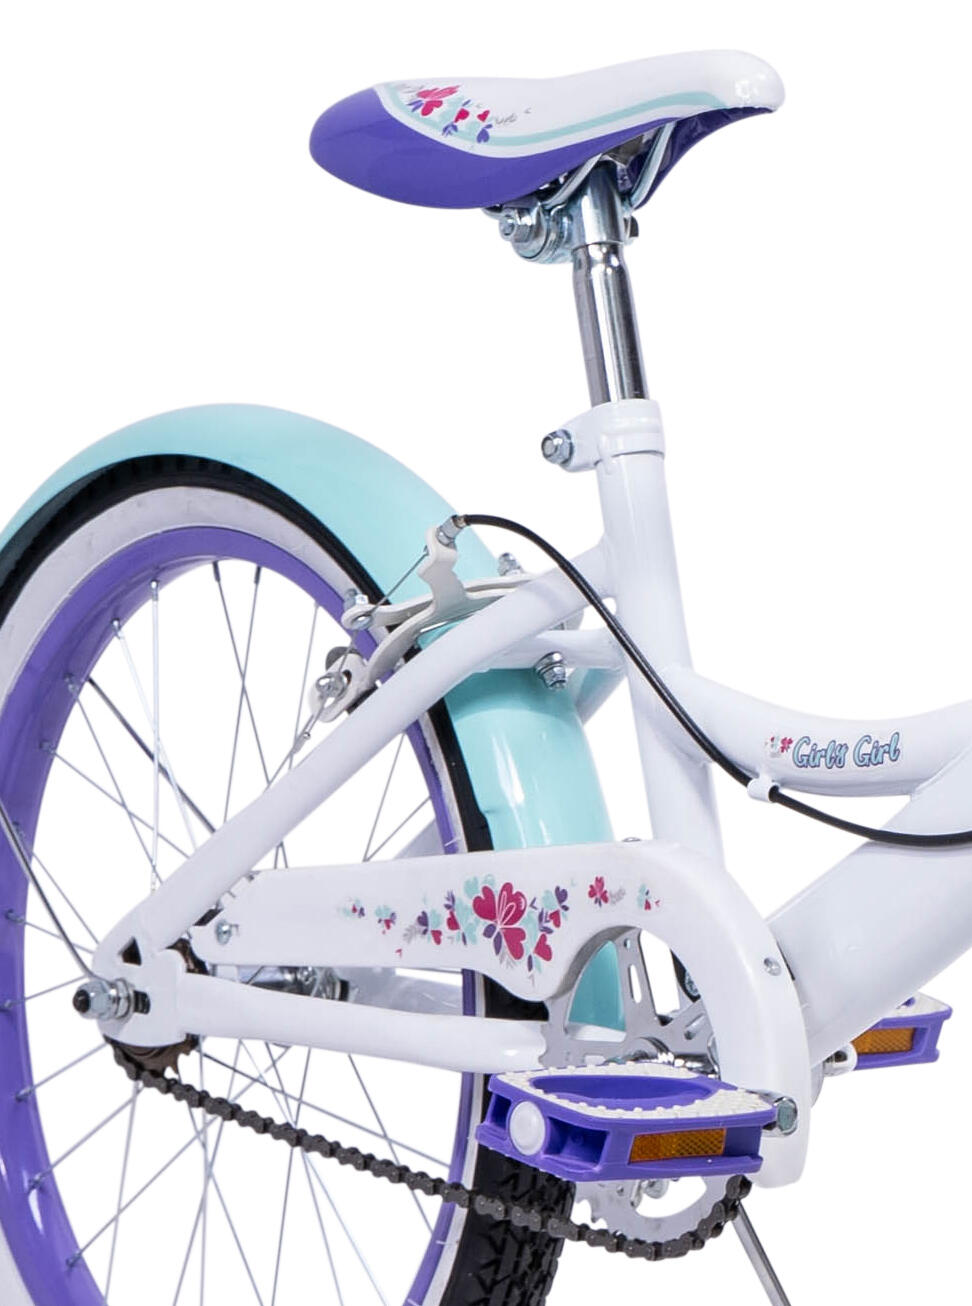 Huffy Girly Girl 20" Kids Bike - White + Purple for Girls aged 6 - 9yrs 5/5